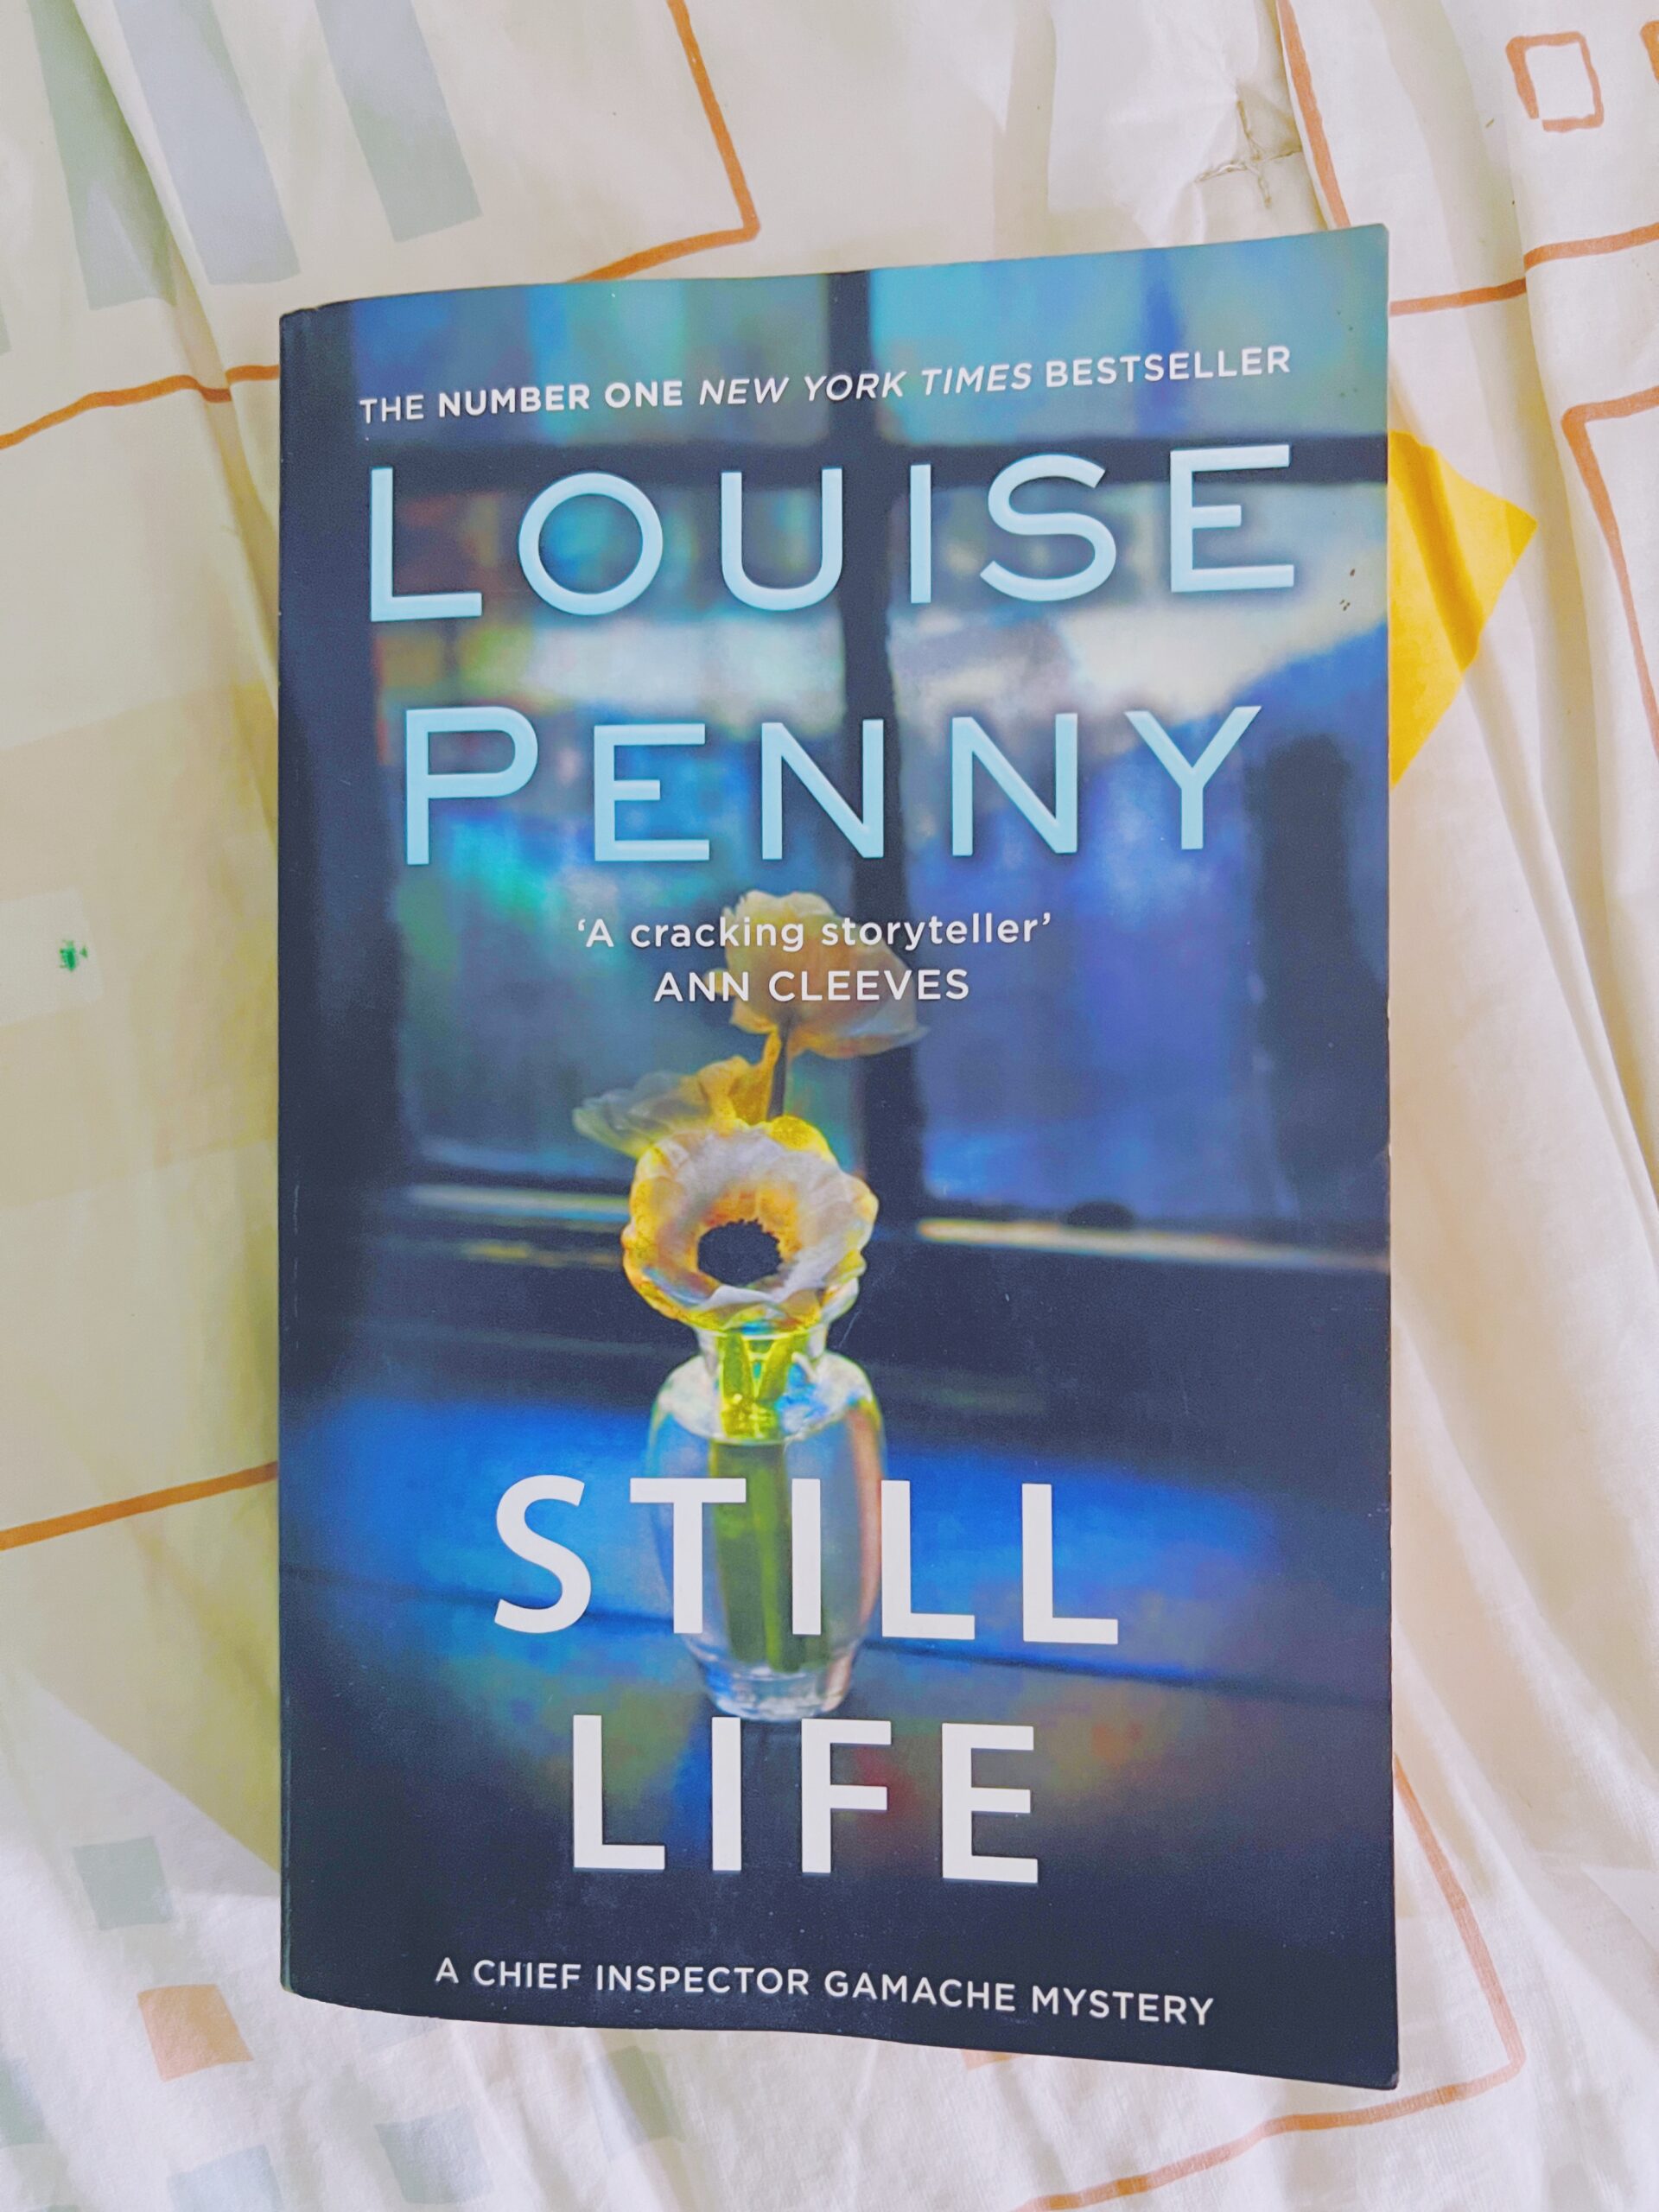 Still Life: A Chief Inspector Gamache Novel : Penny, Louise